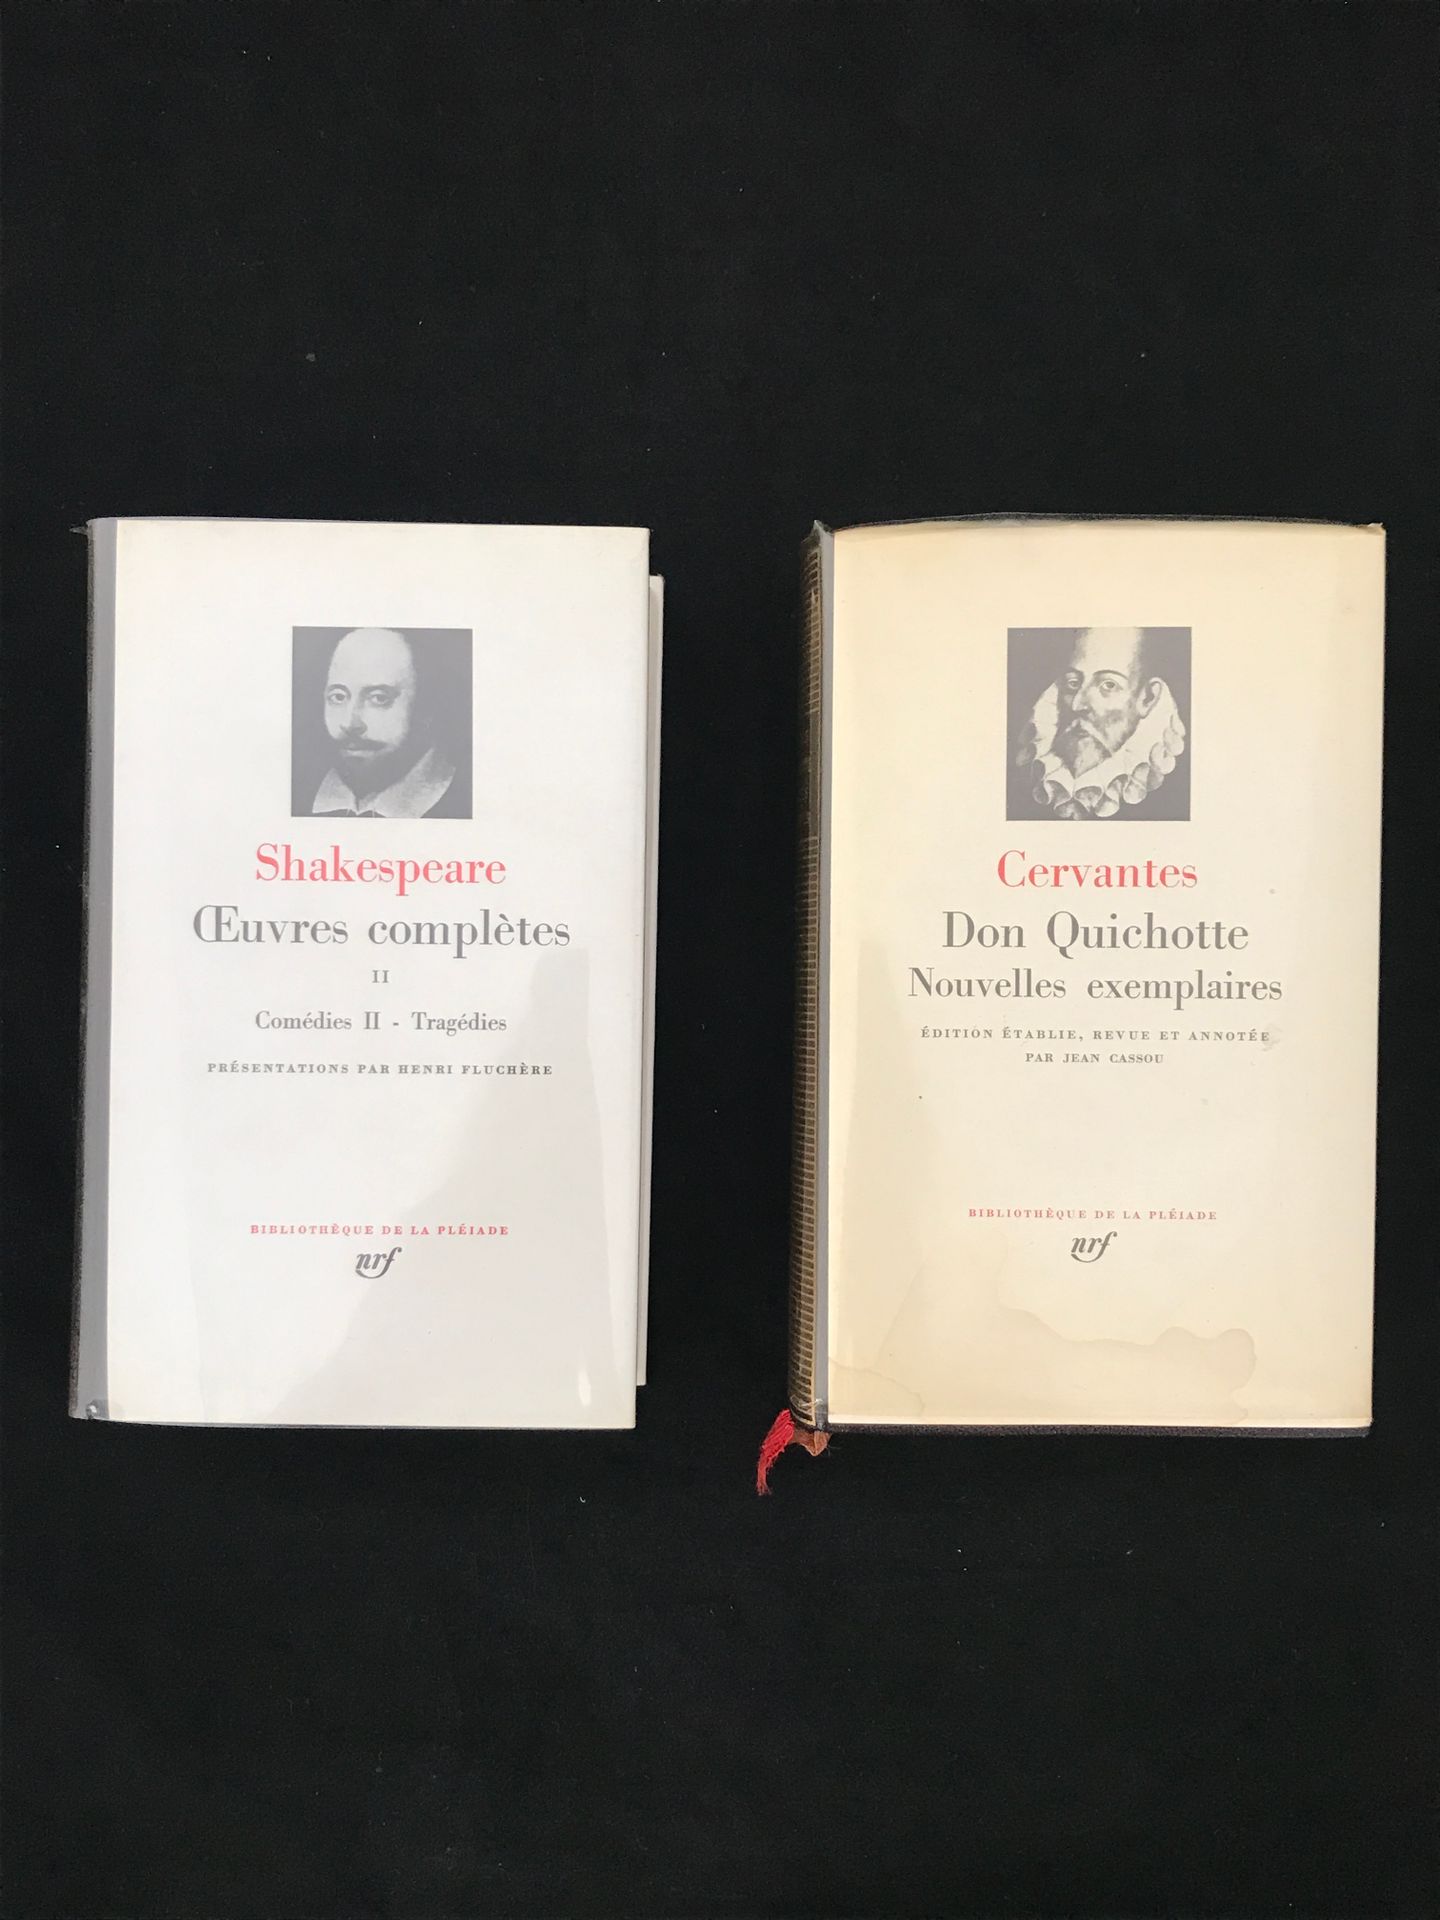 Null La Pléiade, set of two volumes comprising: 

- SHAKESPEARE, "Œuvres Complèt&hellip;